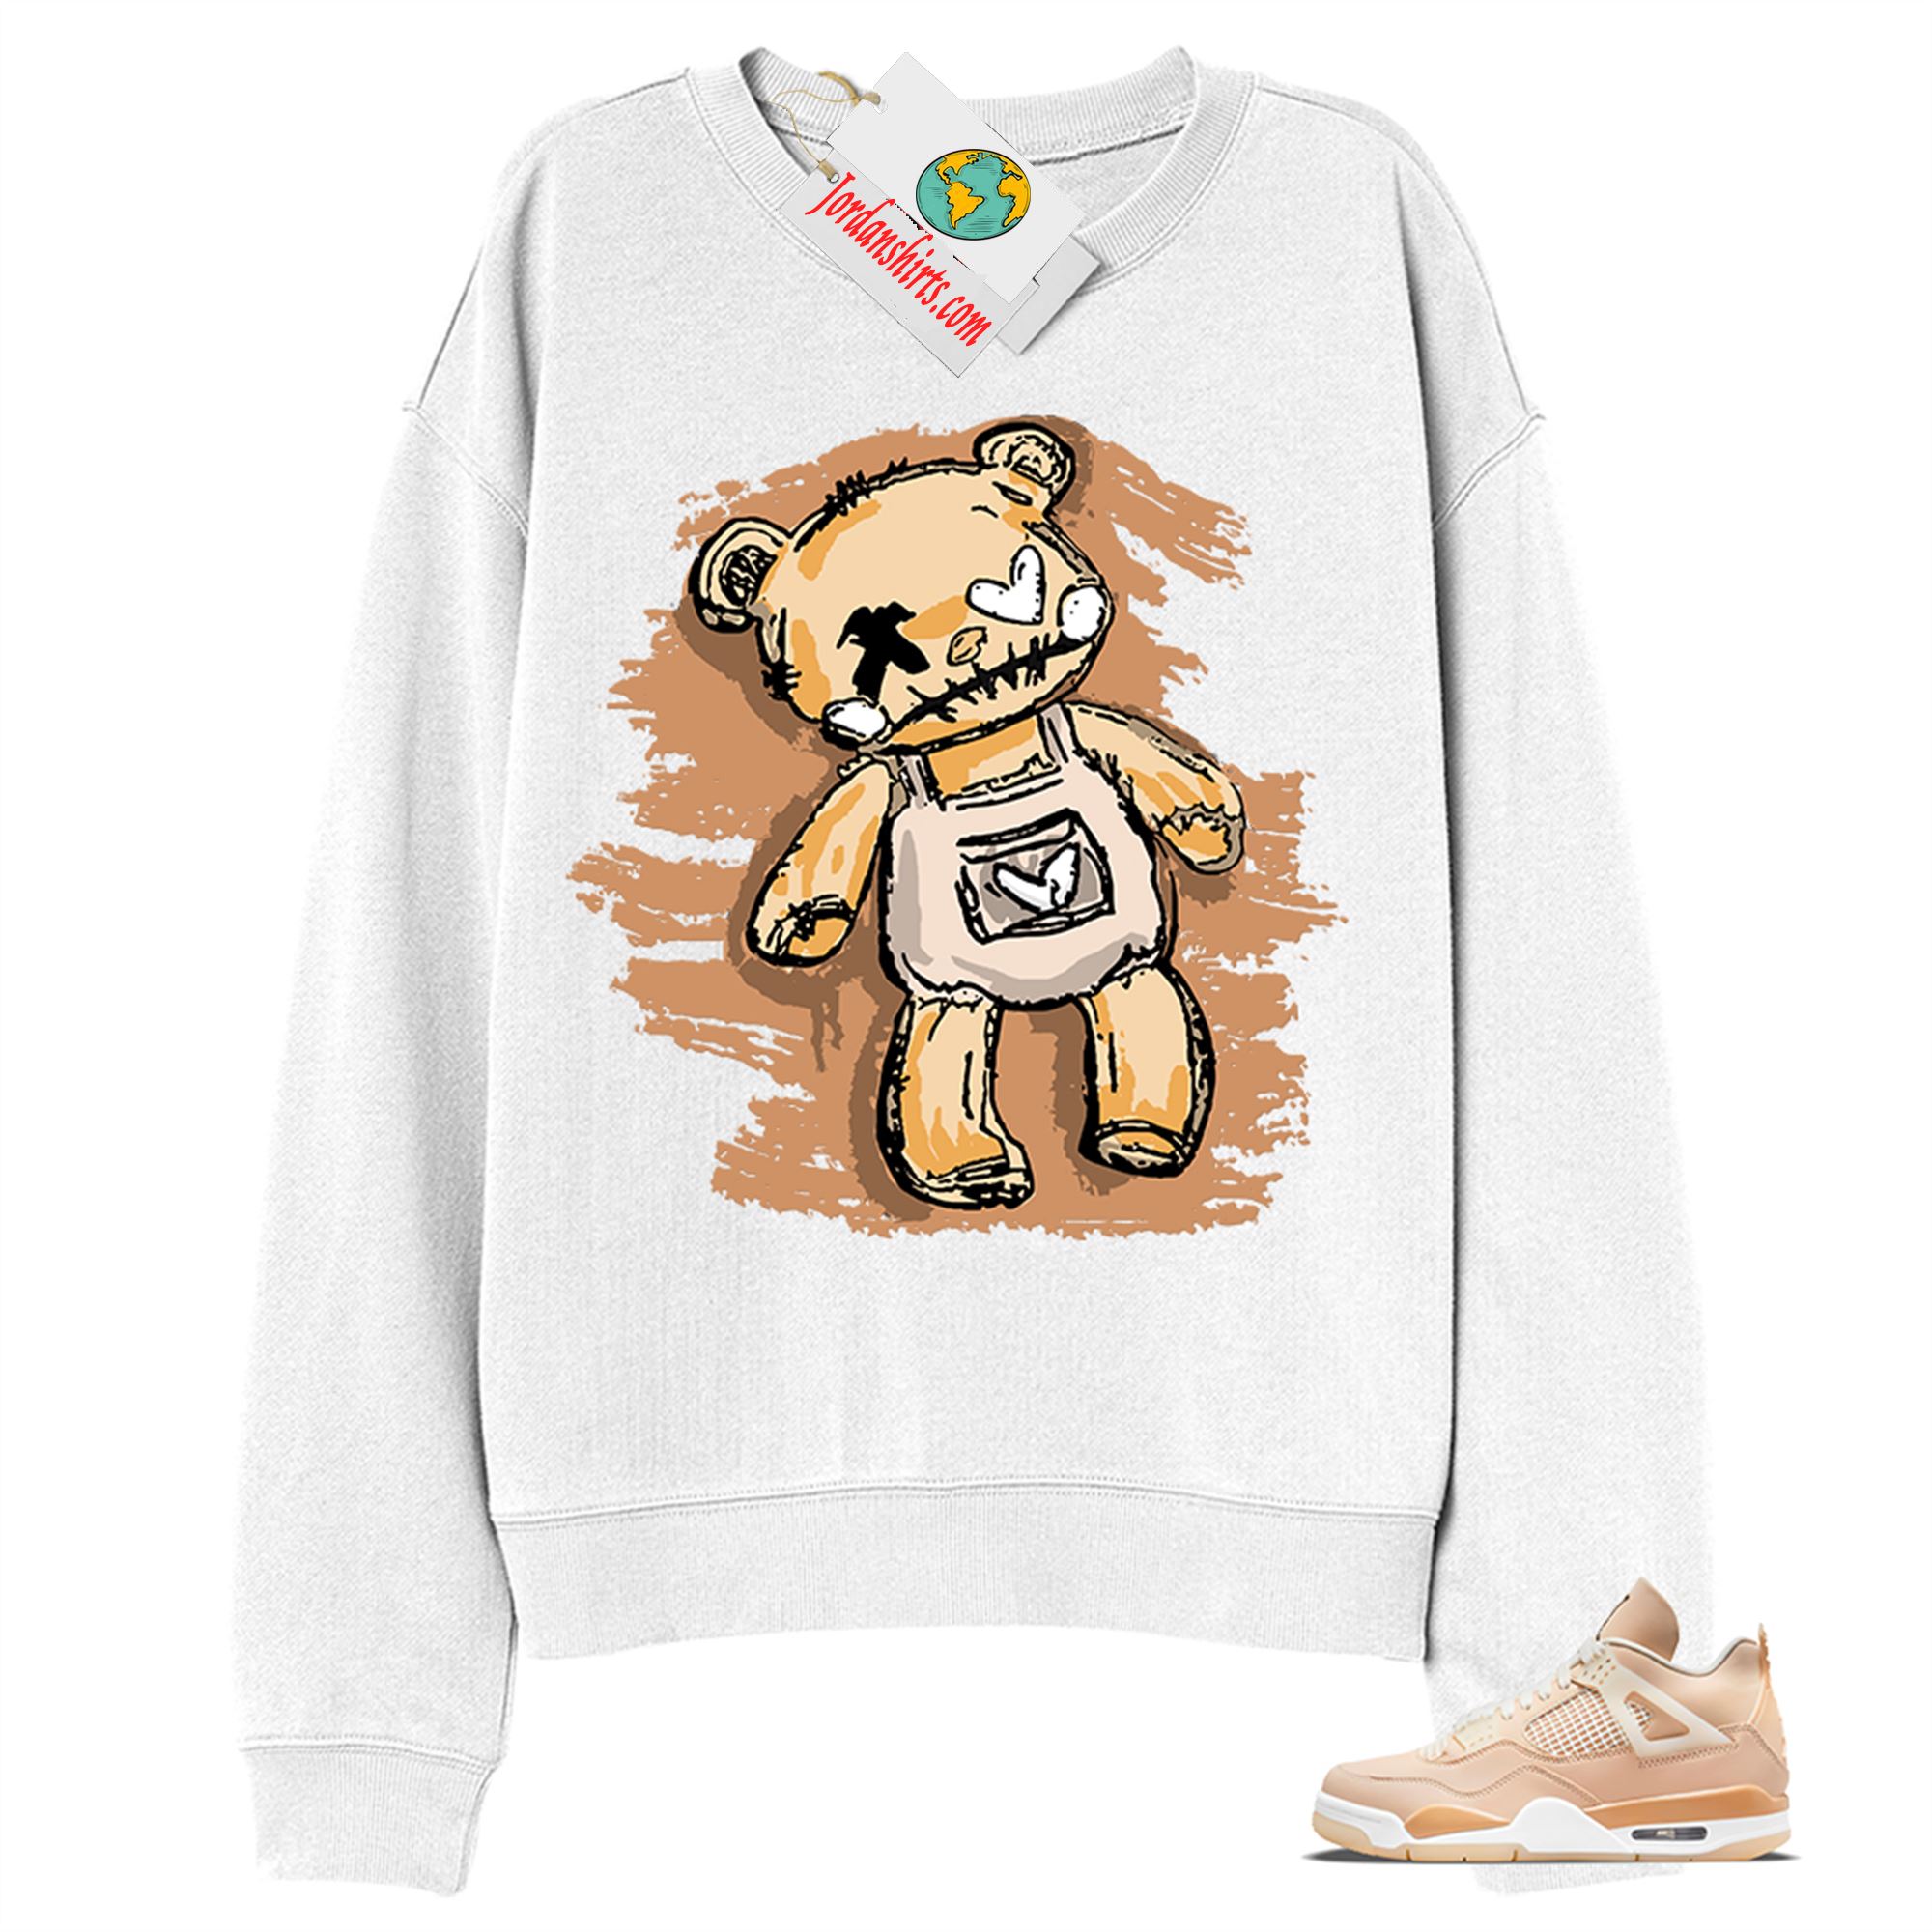 Jordan 4 Sweatshirt, Teddy Bear Broken Heart White Sweatshirt Air Jordan 4 Shimmer 4s Plus Size Up To 5xl